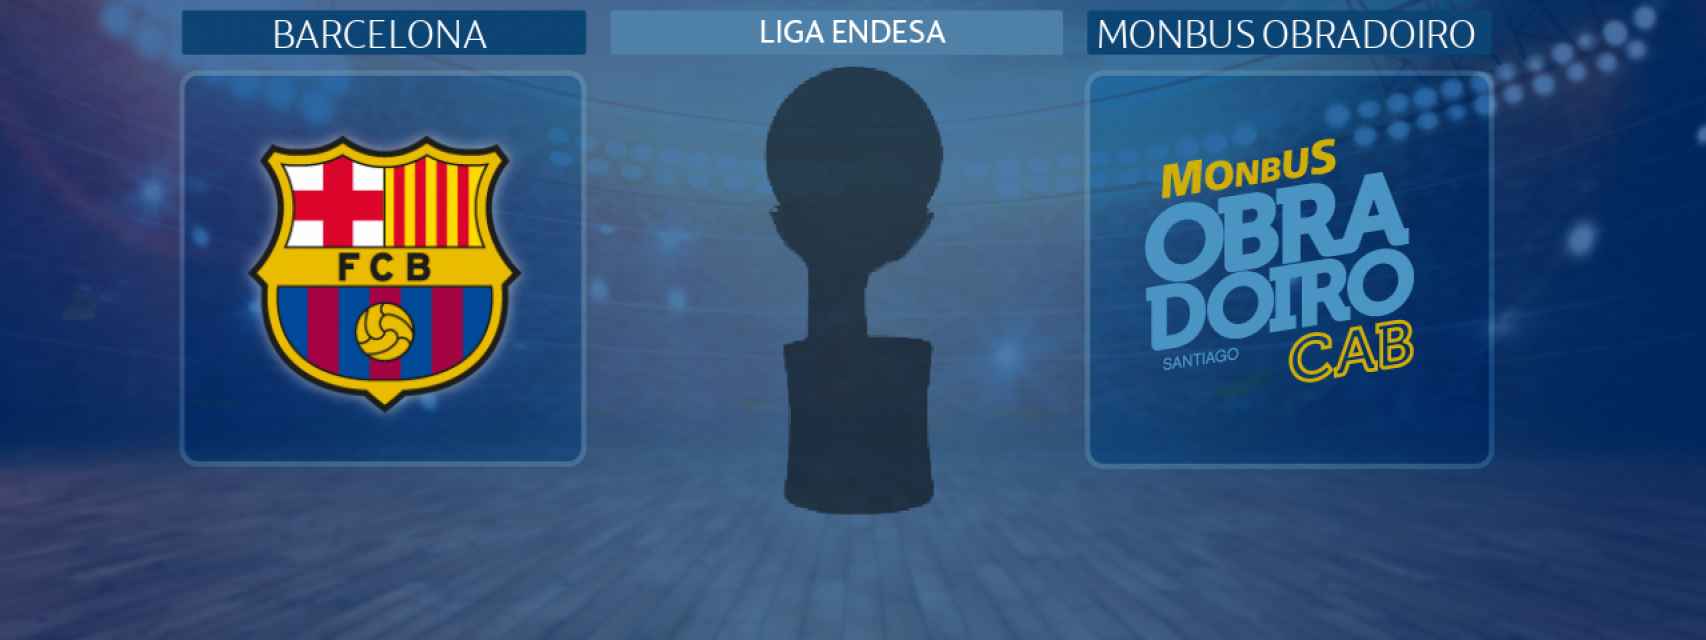 Barcelona - Monbus Obradoiro, partido de la Liga Endesa